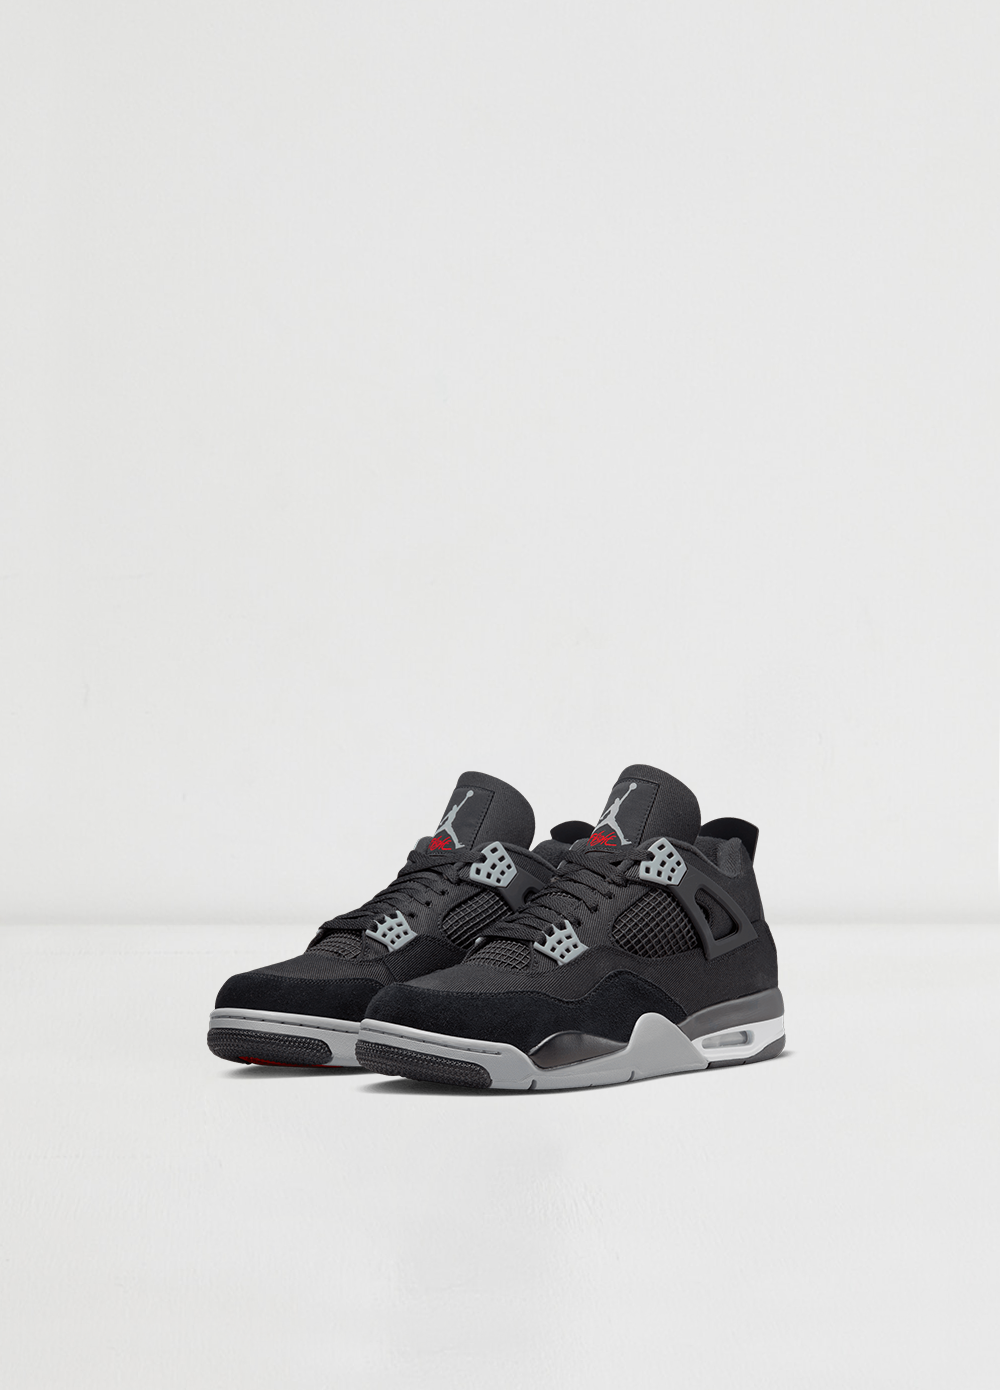 Air Jordan 4 'Black and Light Steel' Sneakers